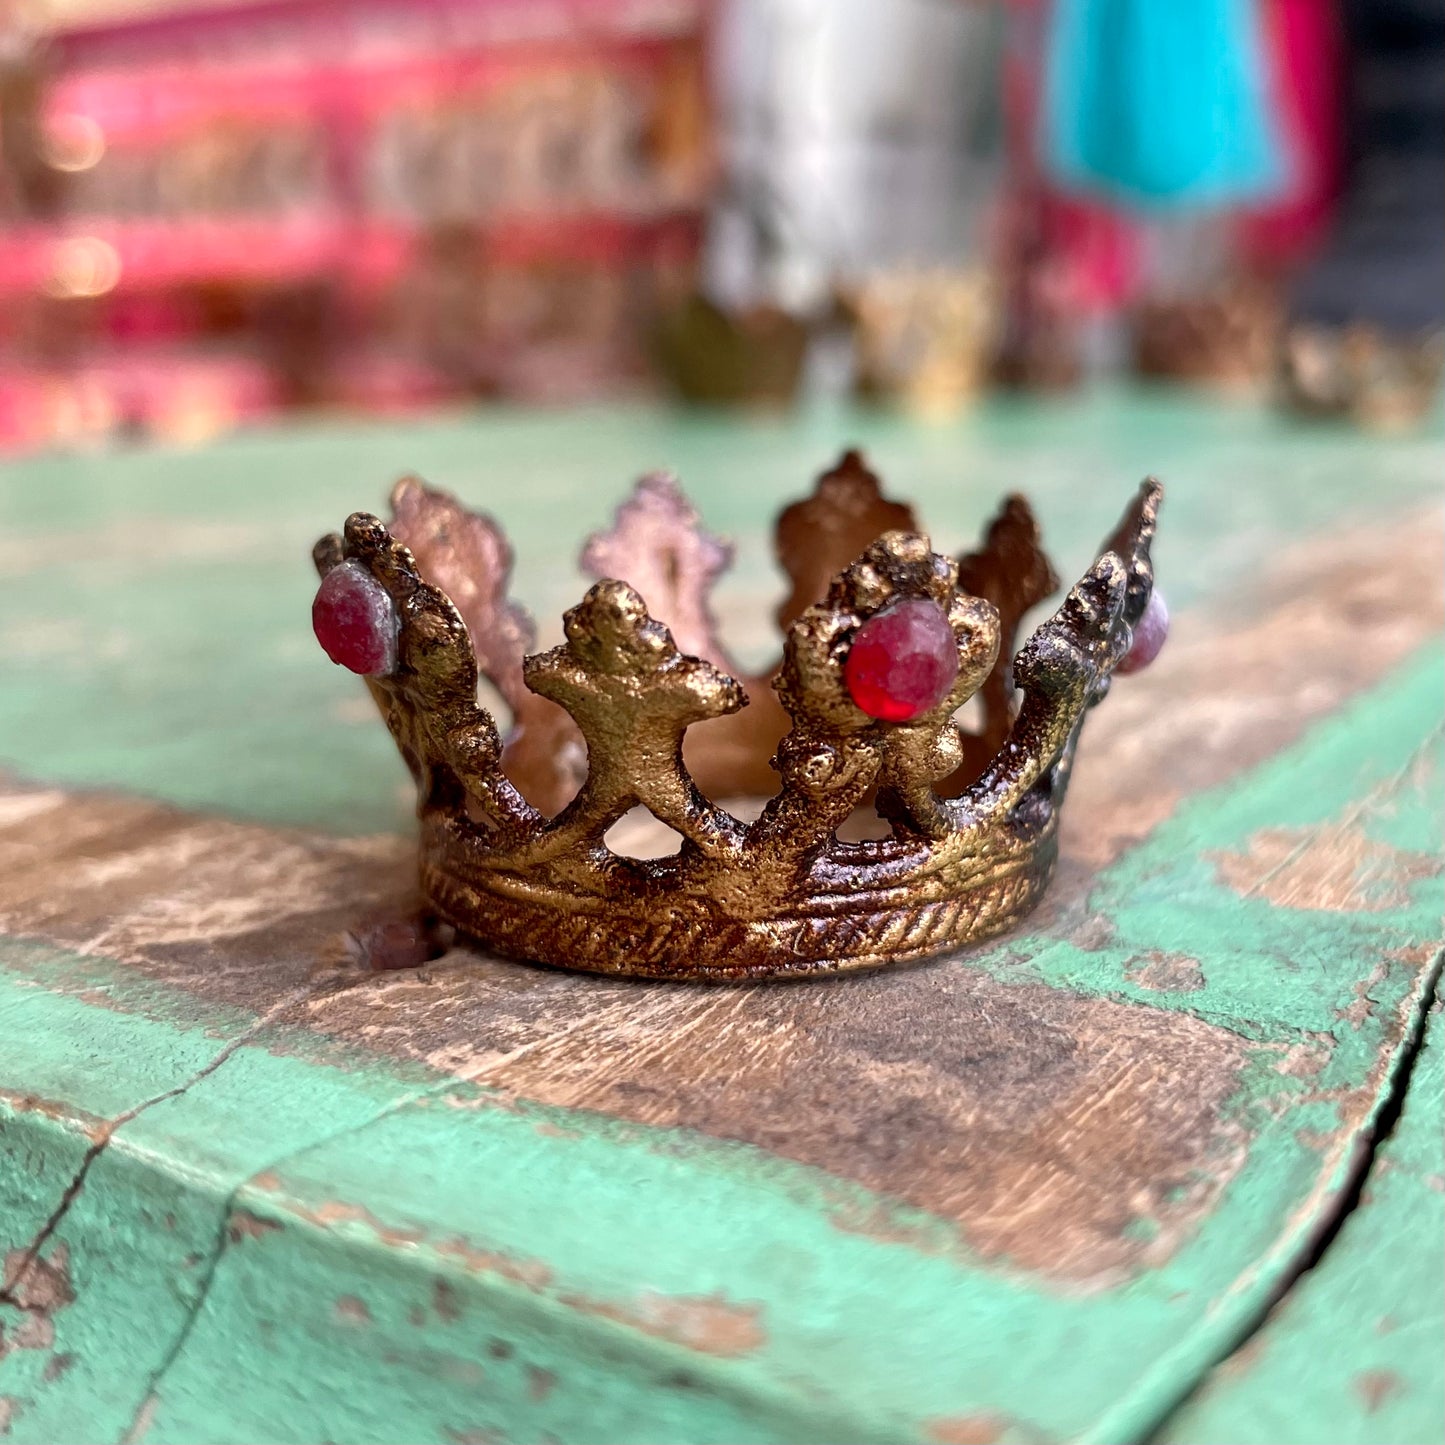 Miniature Crowns